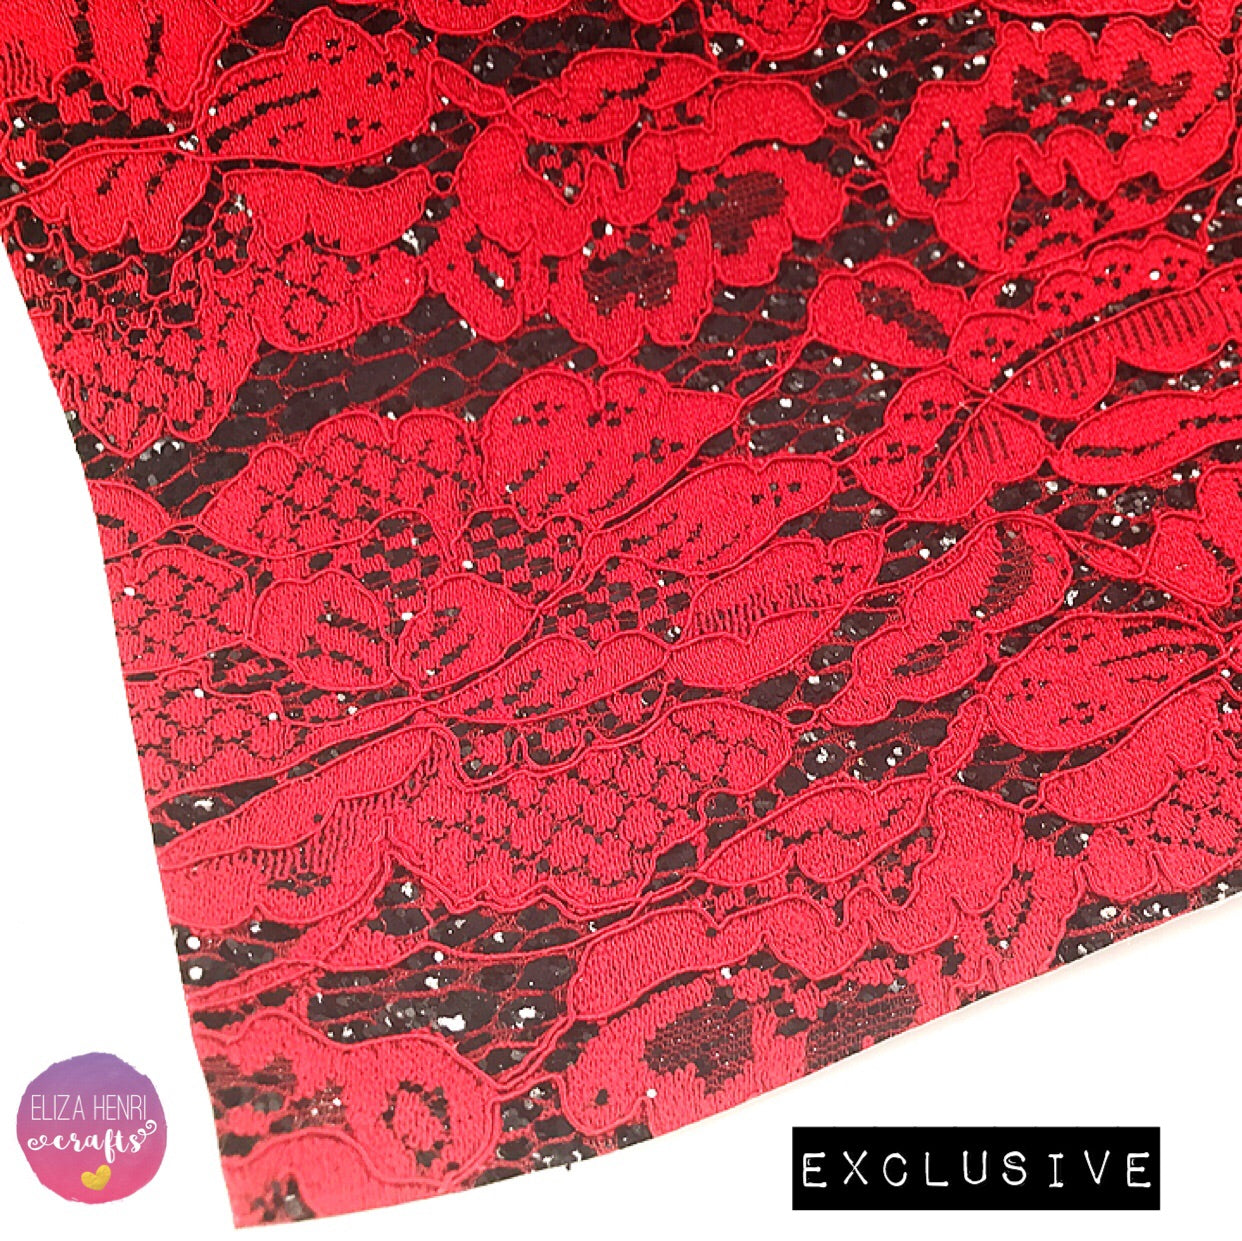 EXCLUSIVE Red & Black Glitter Lace Fabric - Eliza Henri Craft Supply